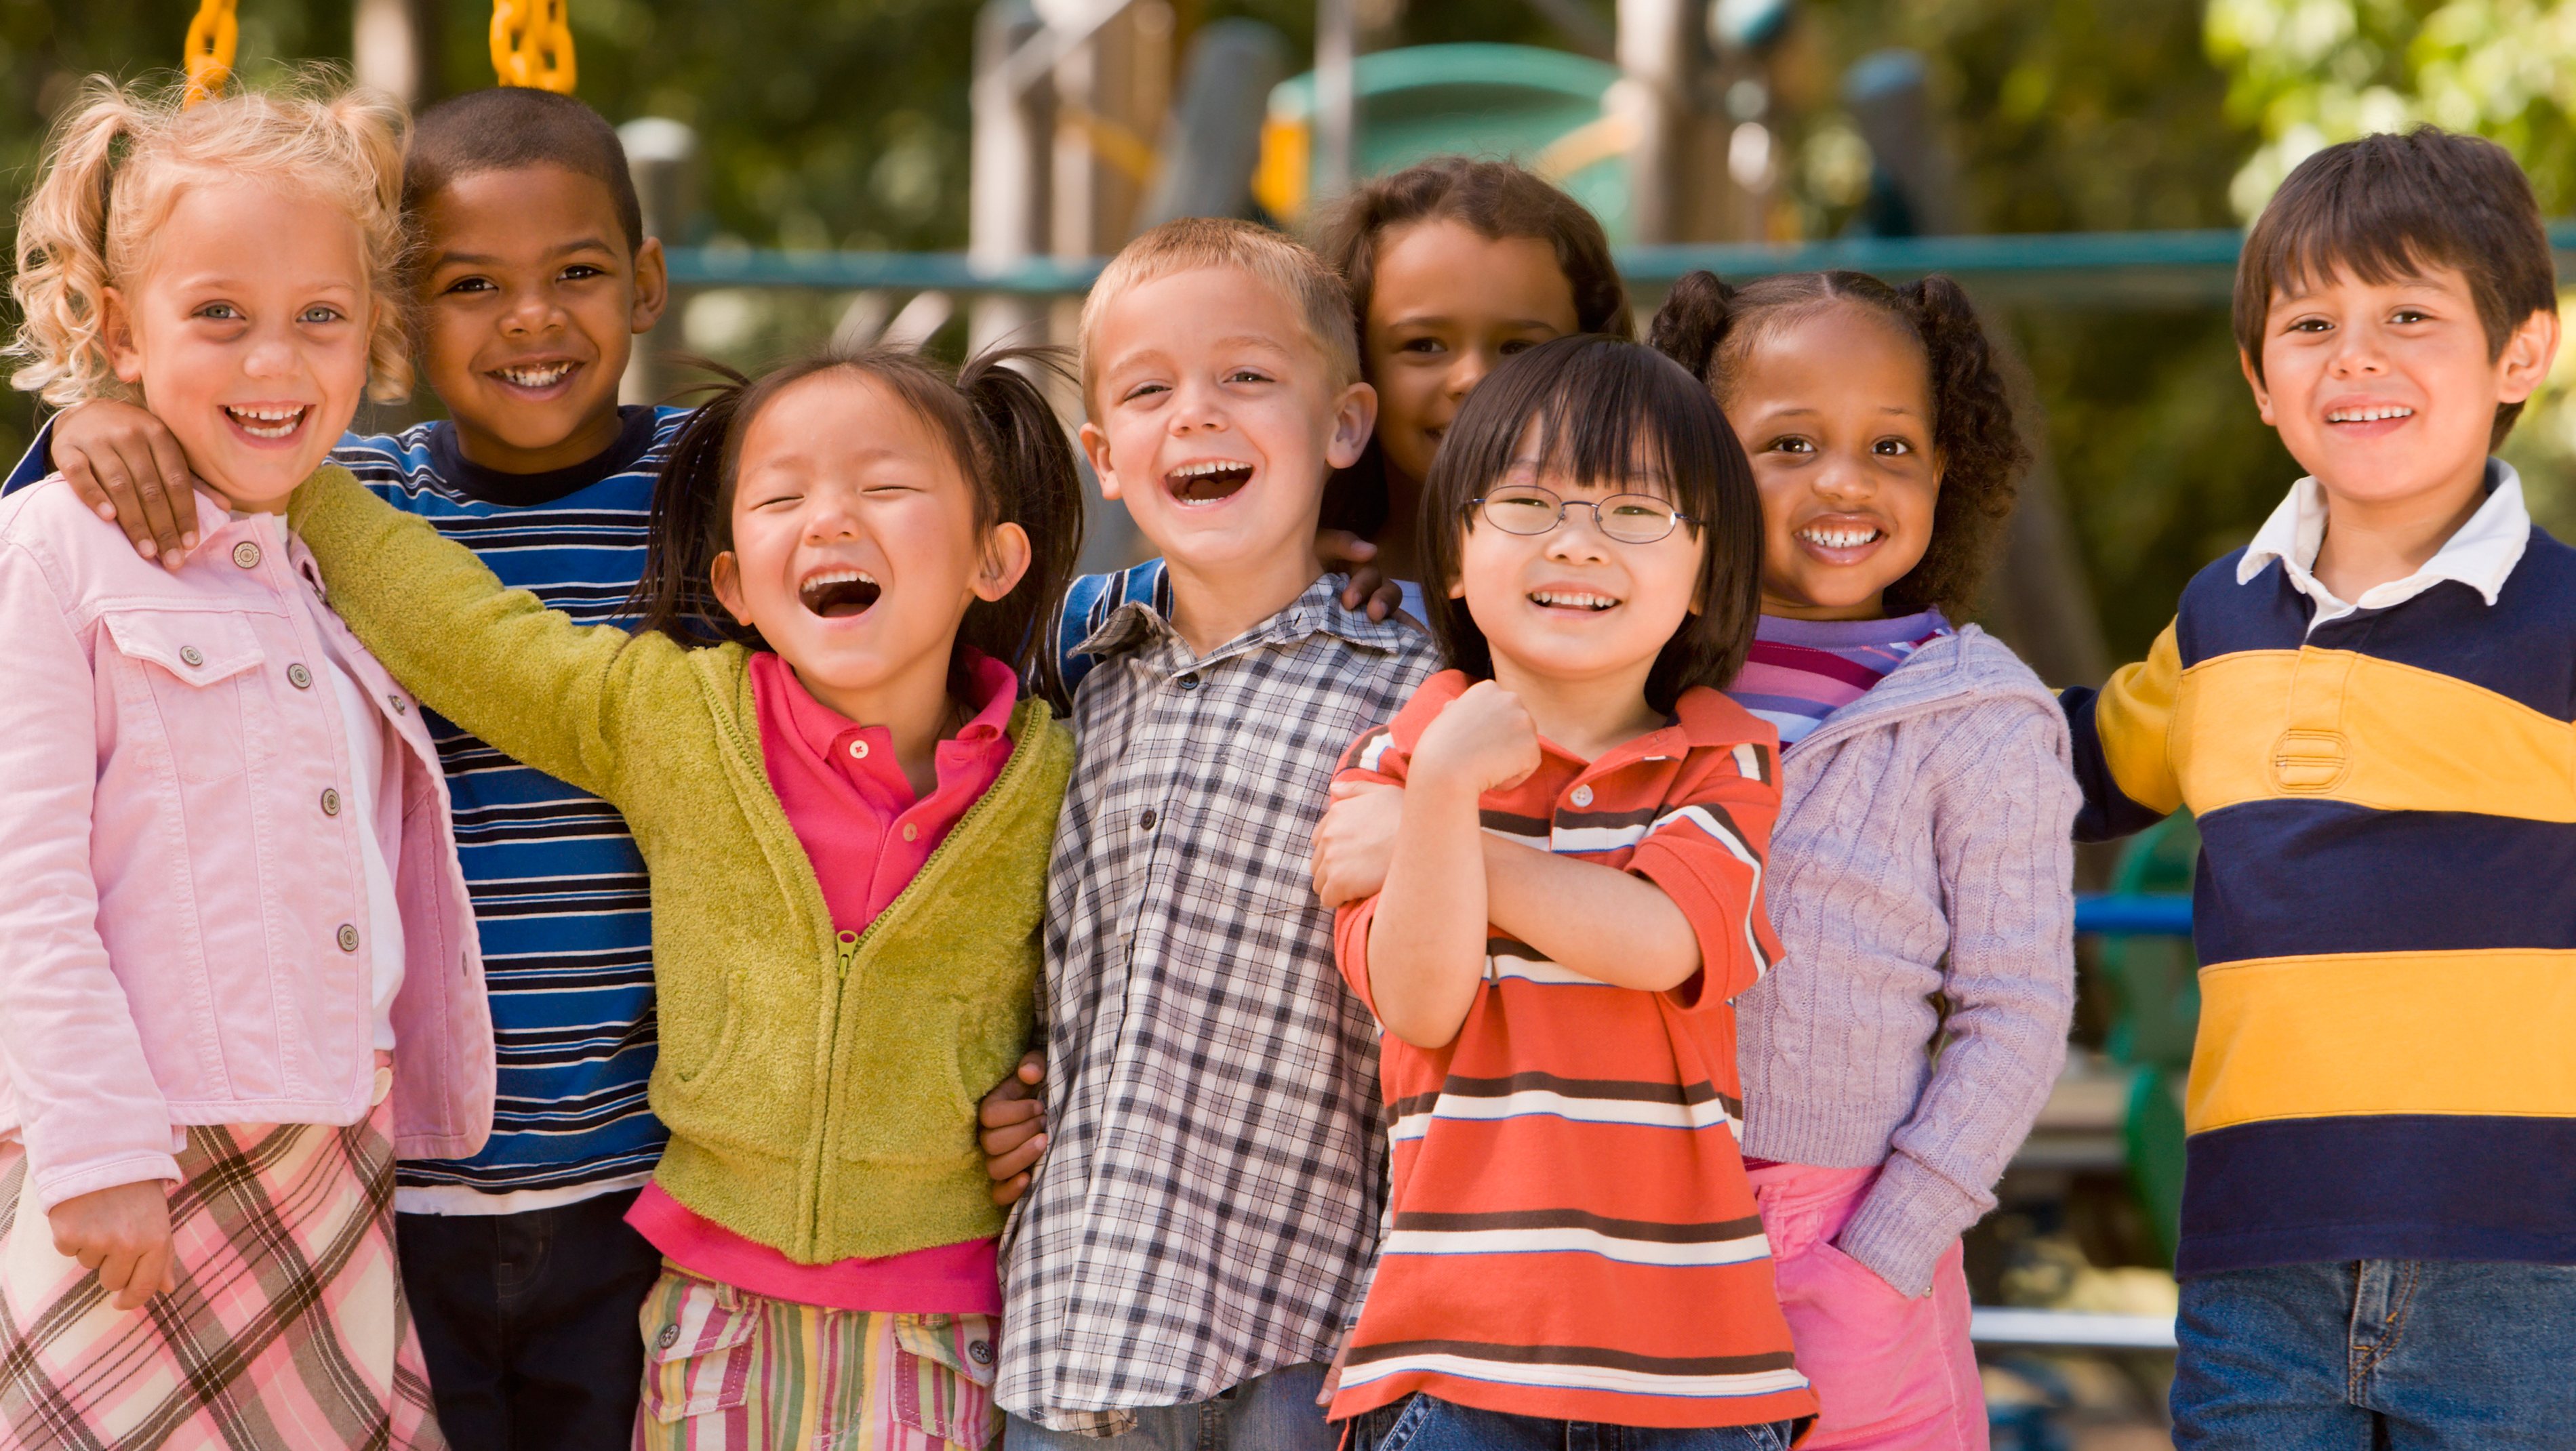 Multi-ethnic children at playground